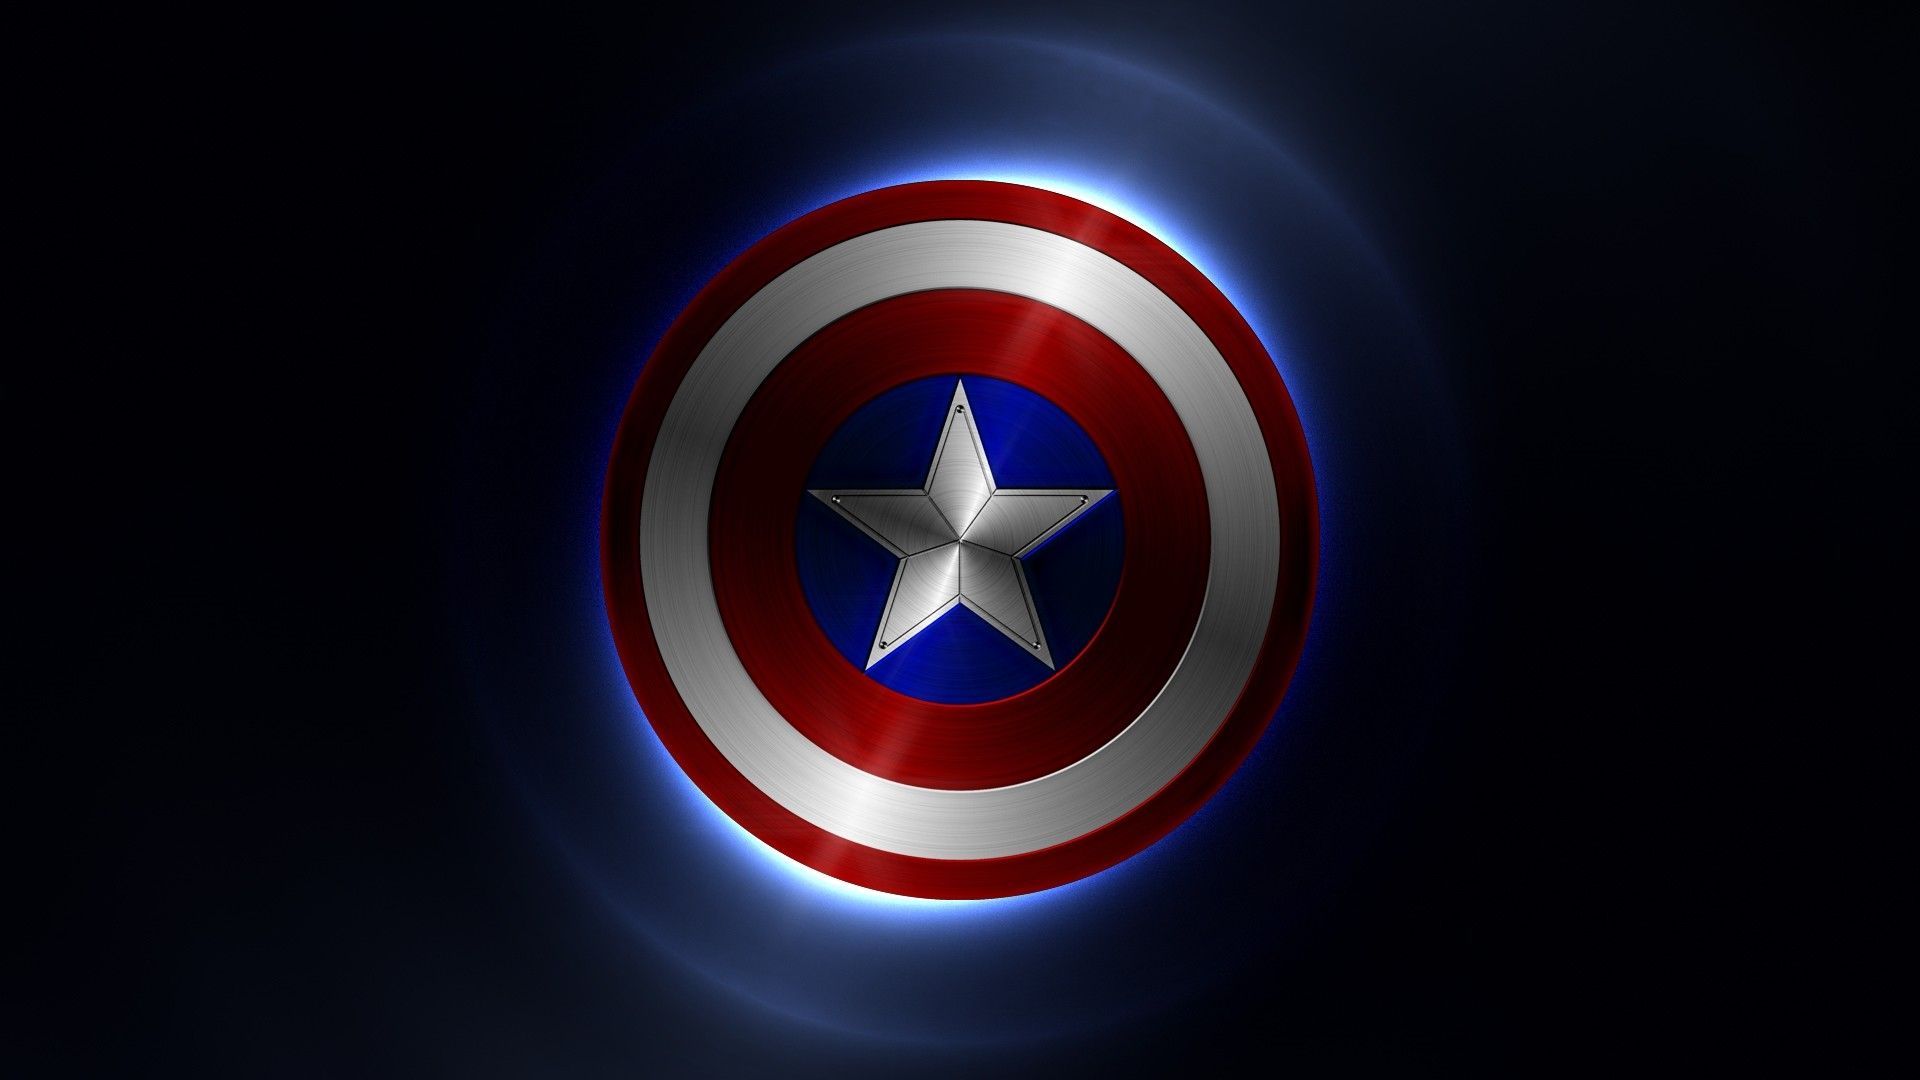 Captain America Shield wallpaper 1920x1080px for your desktop - Captain America